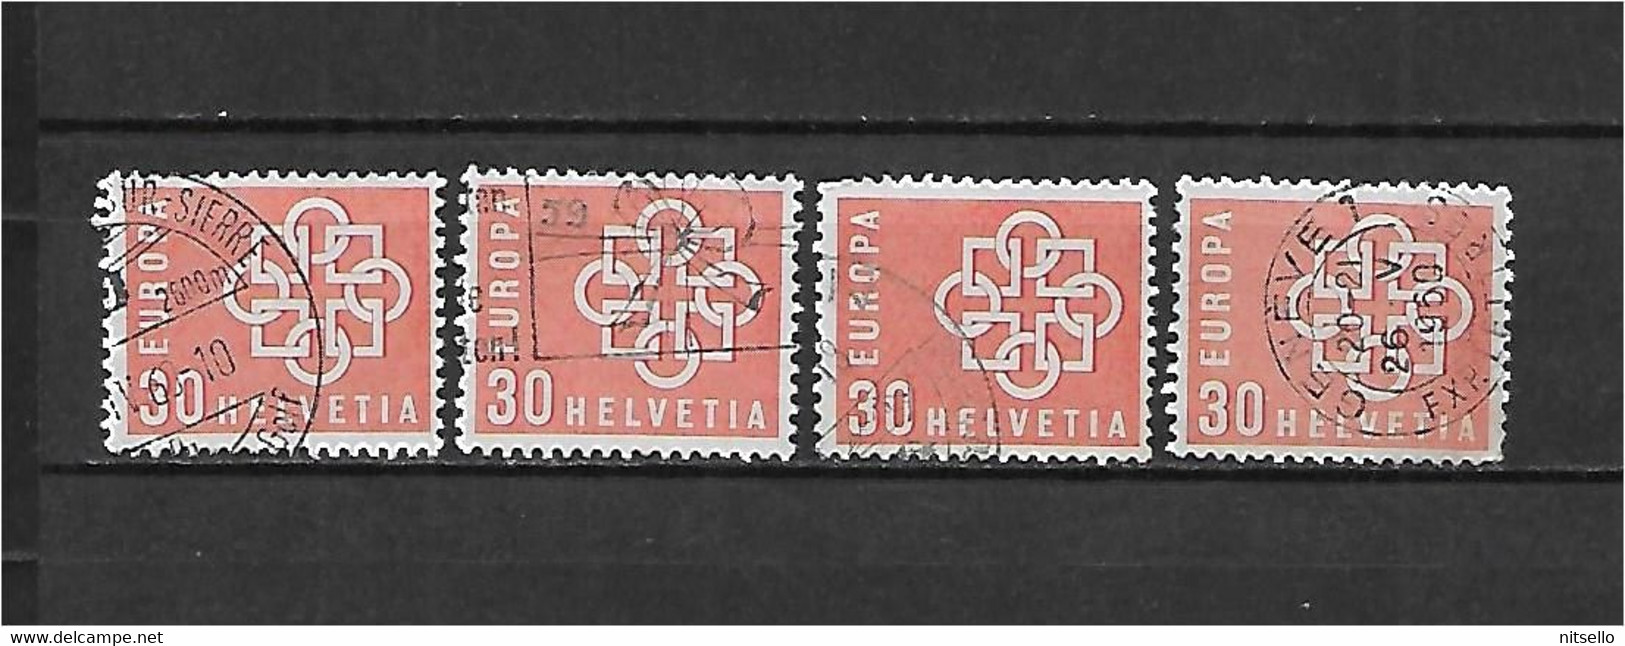 LOTE 1583  ///  SUIZA   YVERT Nº: 630 CON VARIOS MATASELLOS     ¡¡¡ OFERTA - LIQUIDATION - JE LIQUIDE !!! - Used Stamps